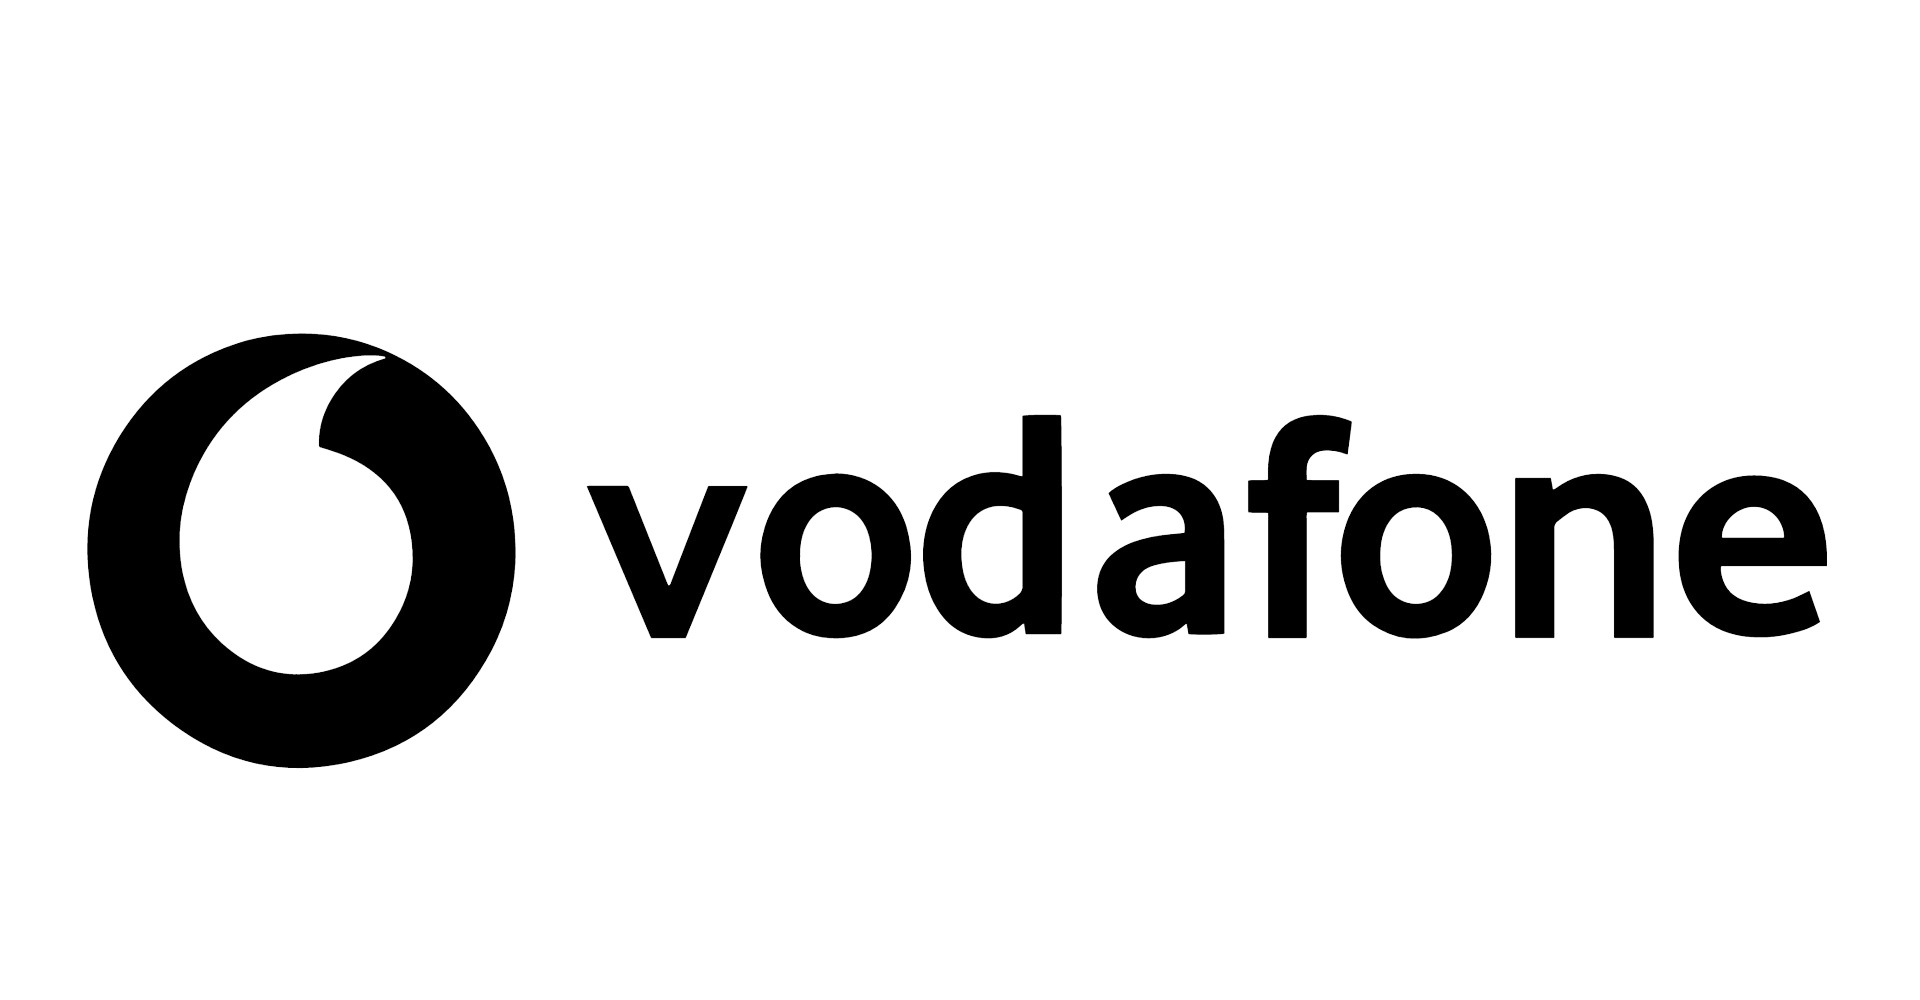 vodafone-logo-brand-phone-symbol-with-name-black-design-england-mobile-illustration-free-vector